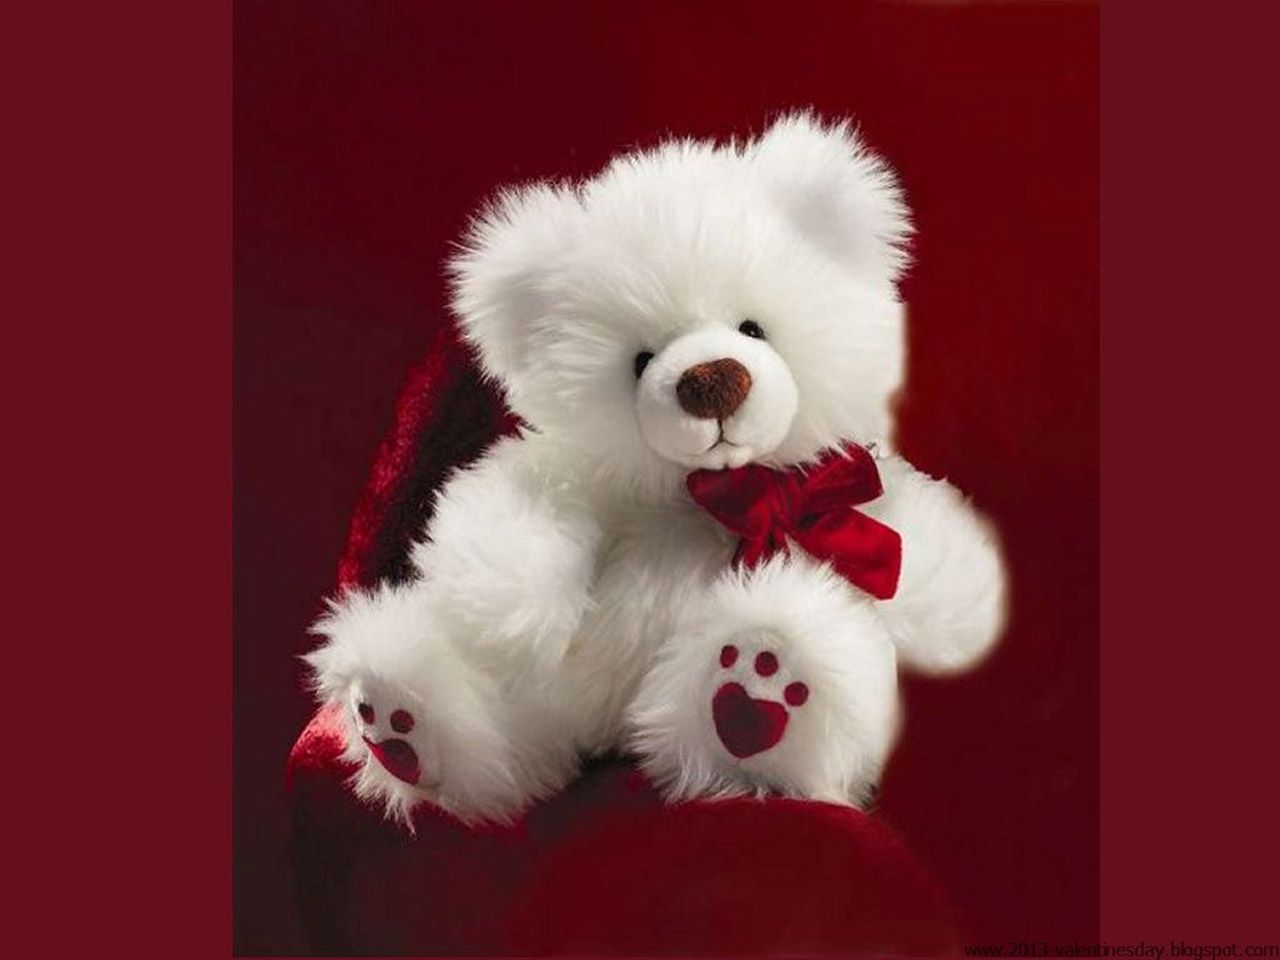 Cute Teddy Bear Wallpaper # 7019975